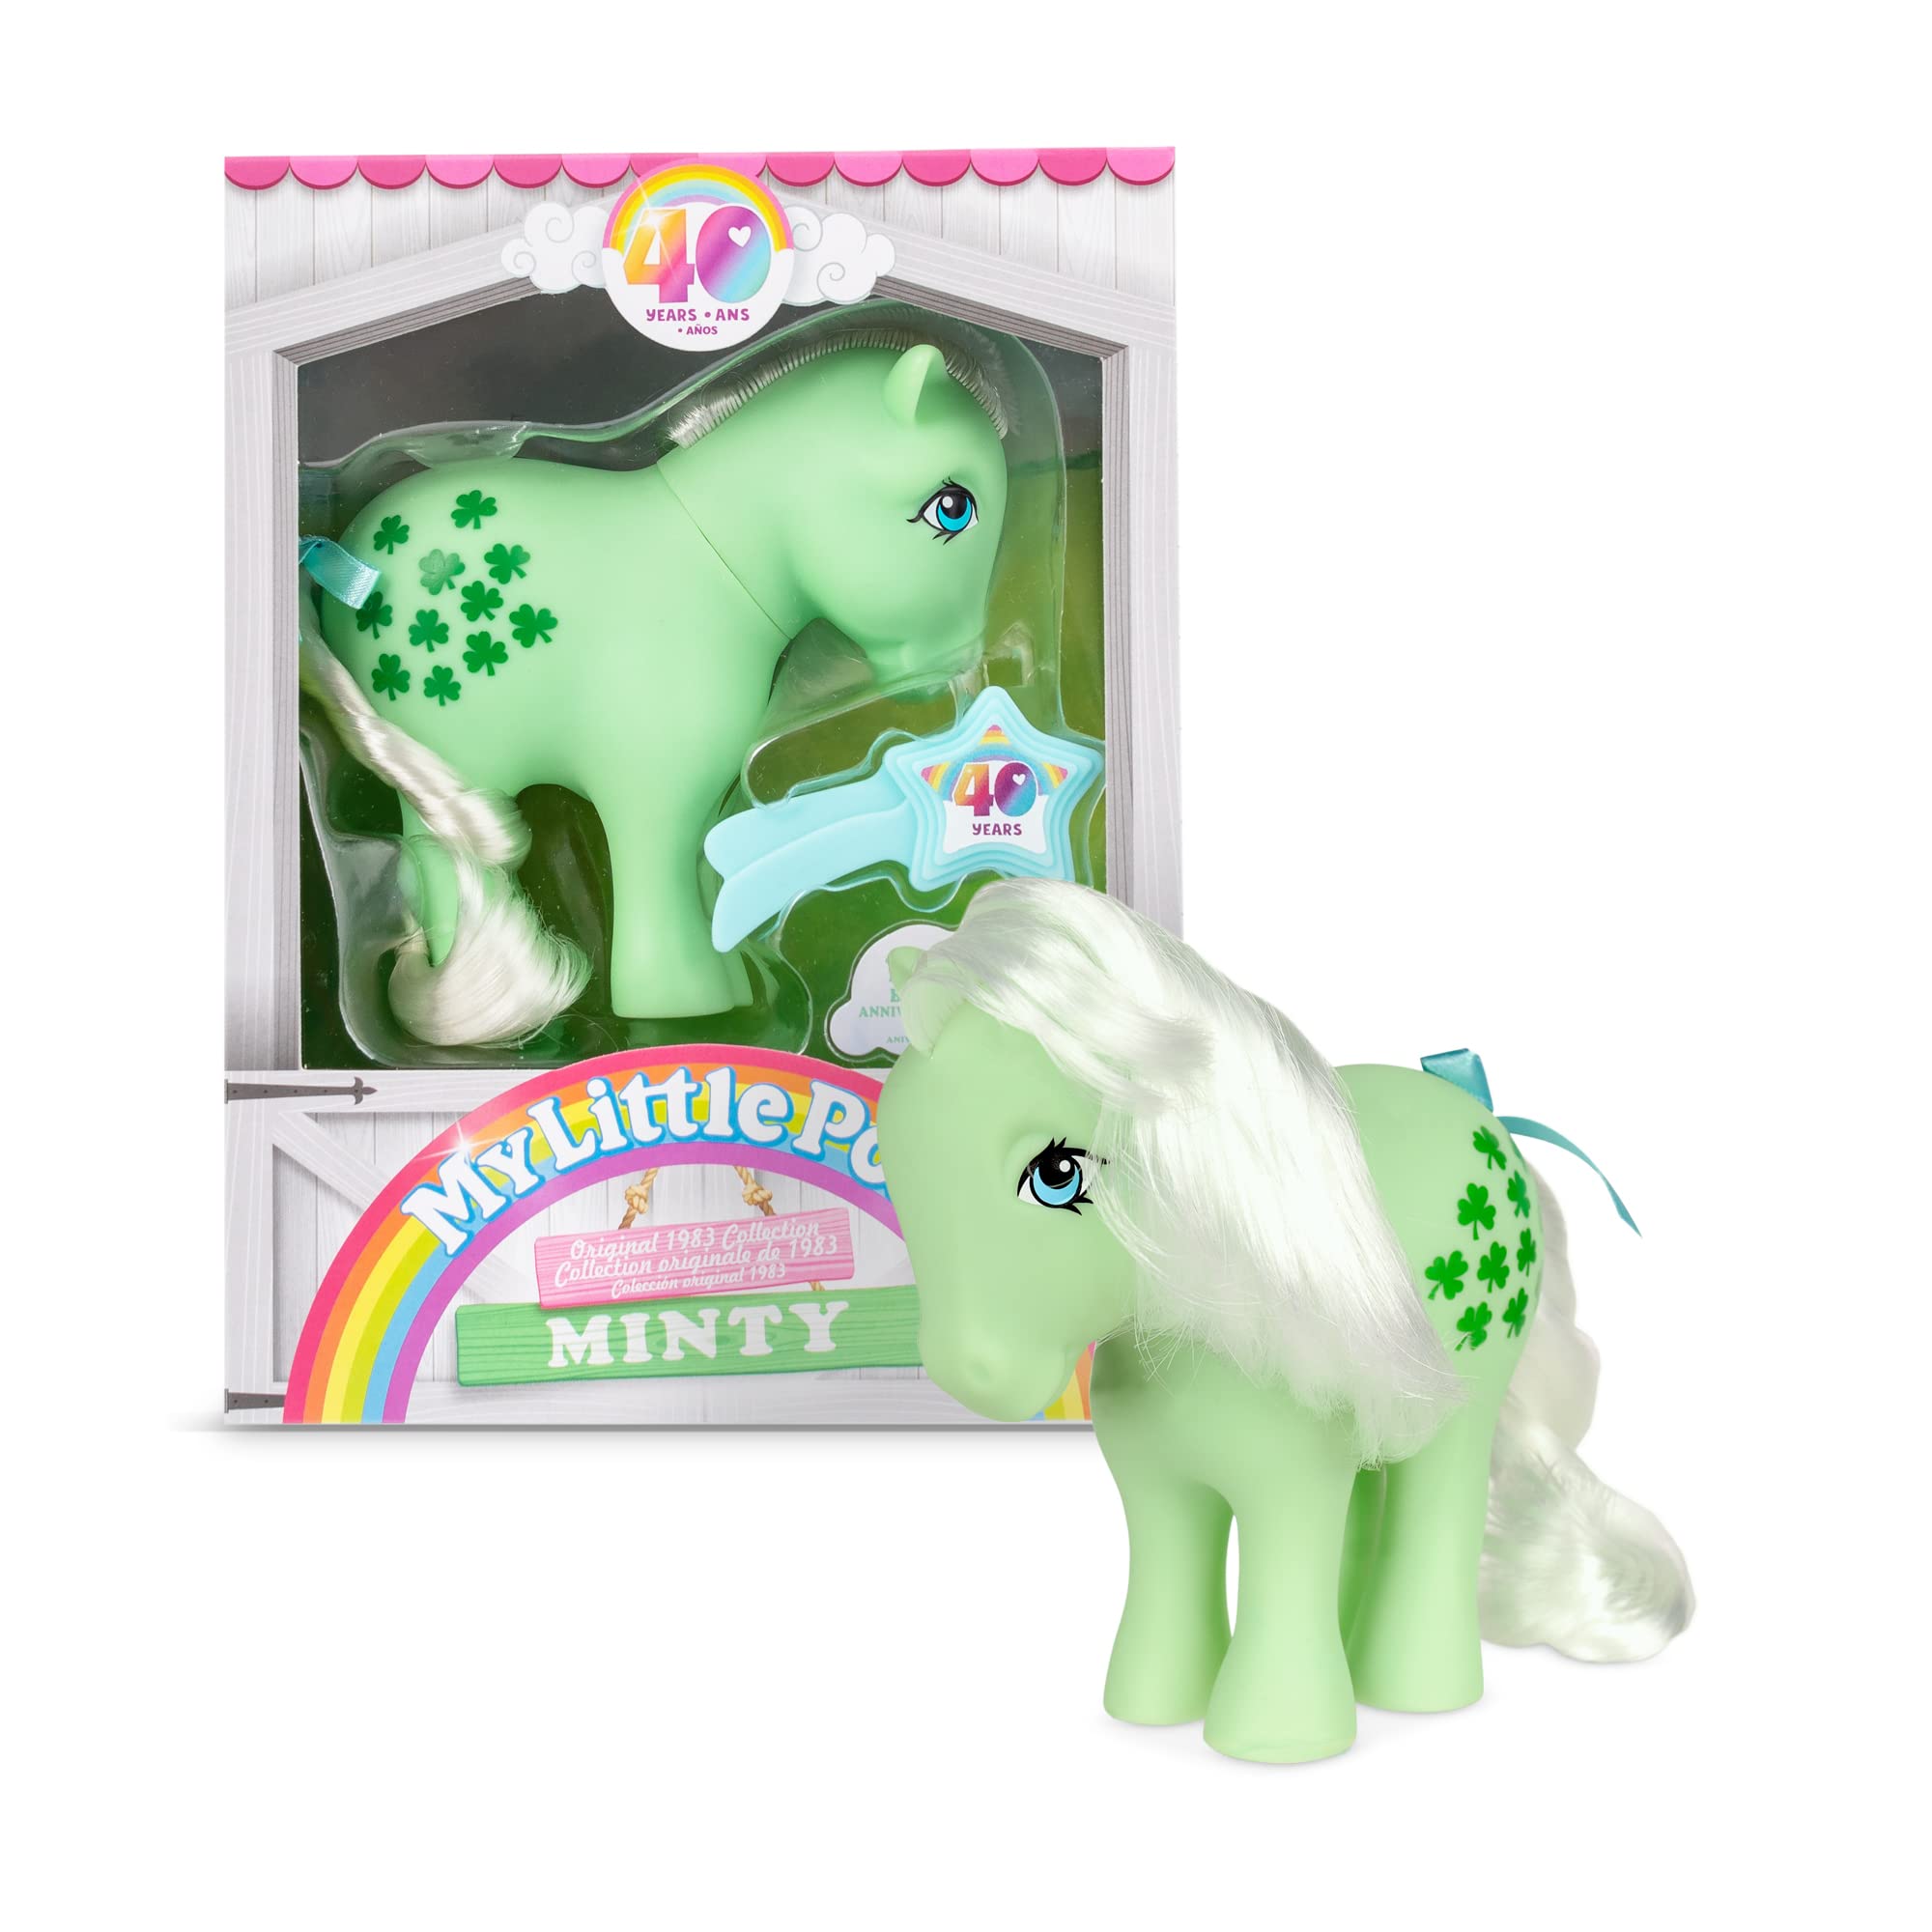 My Little Pony 40th Anniversary Original Ponies - Minty